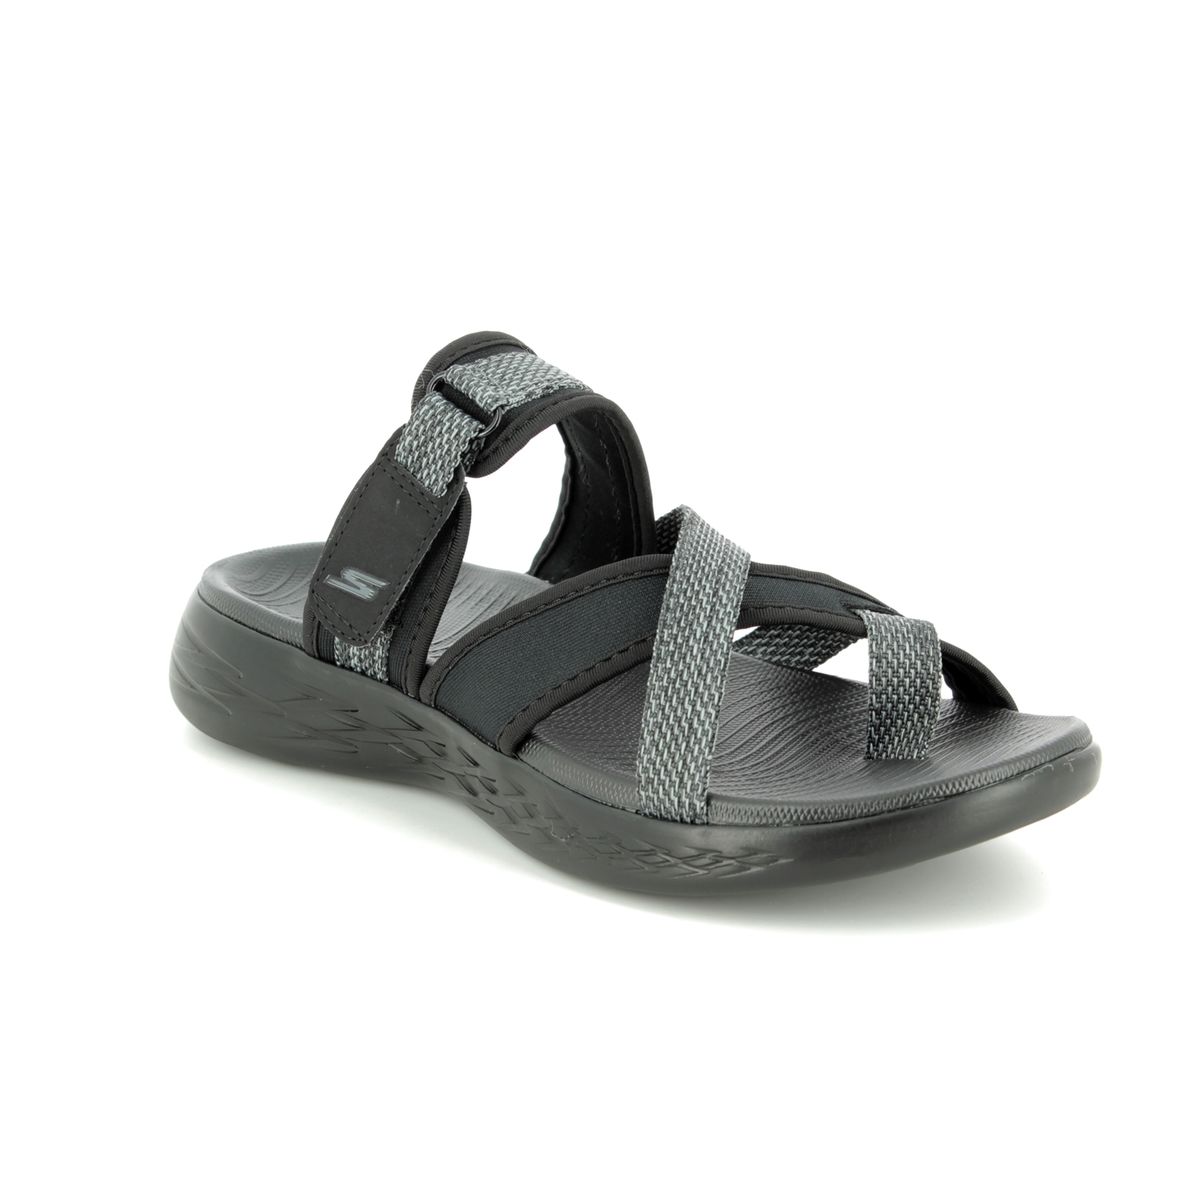 Go Glow 15308 BKGY Black grey Slide Sandals